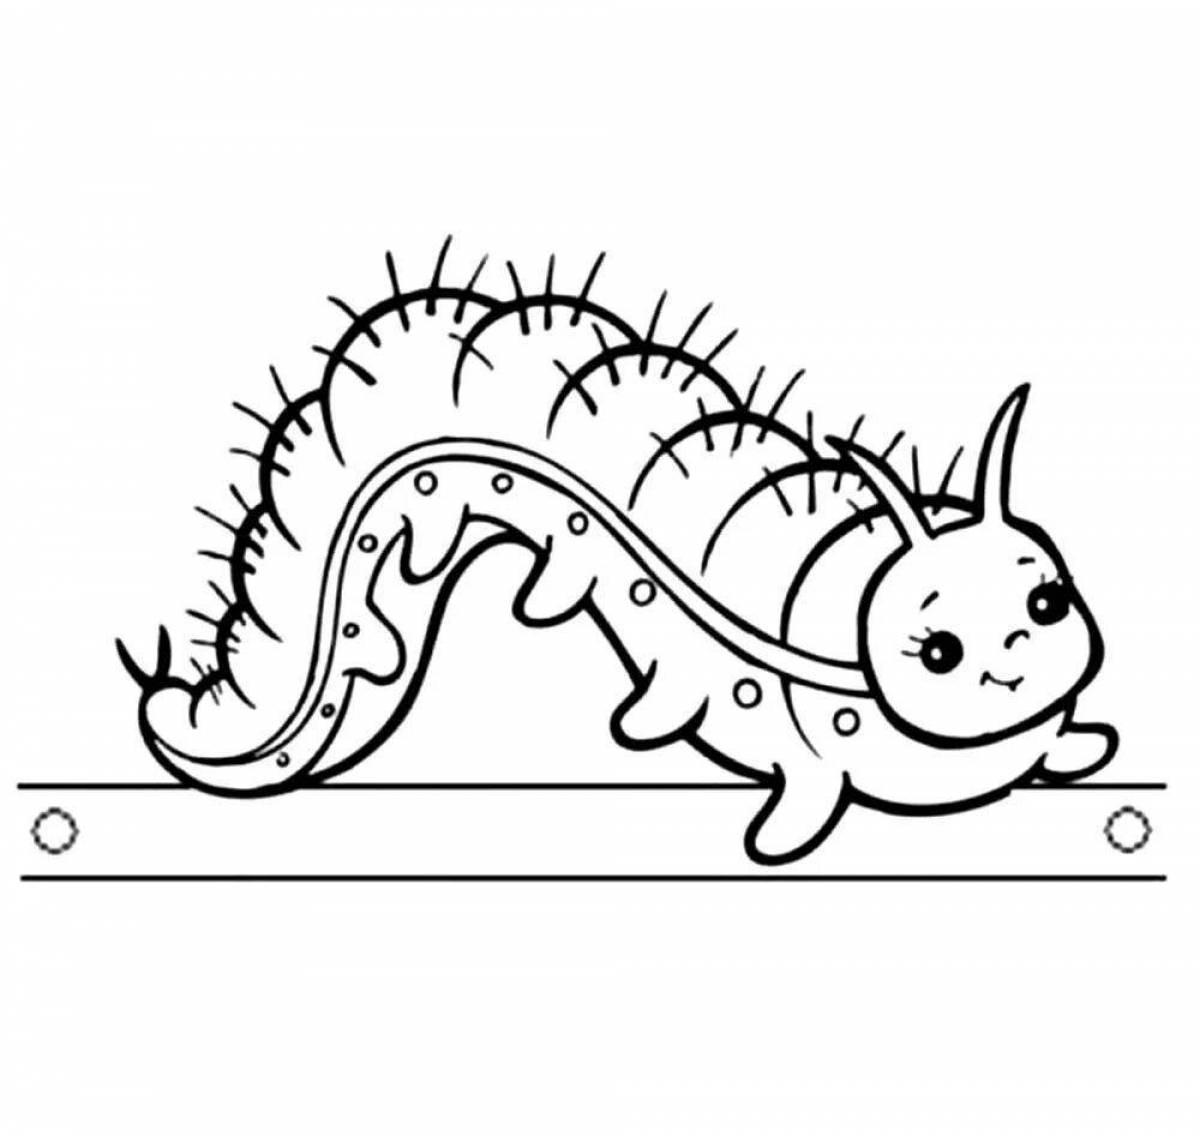 Coloring caterpillar for kids